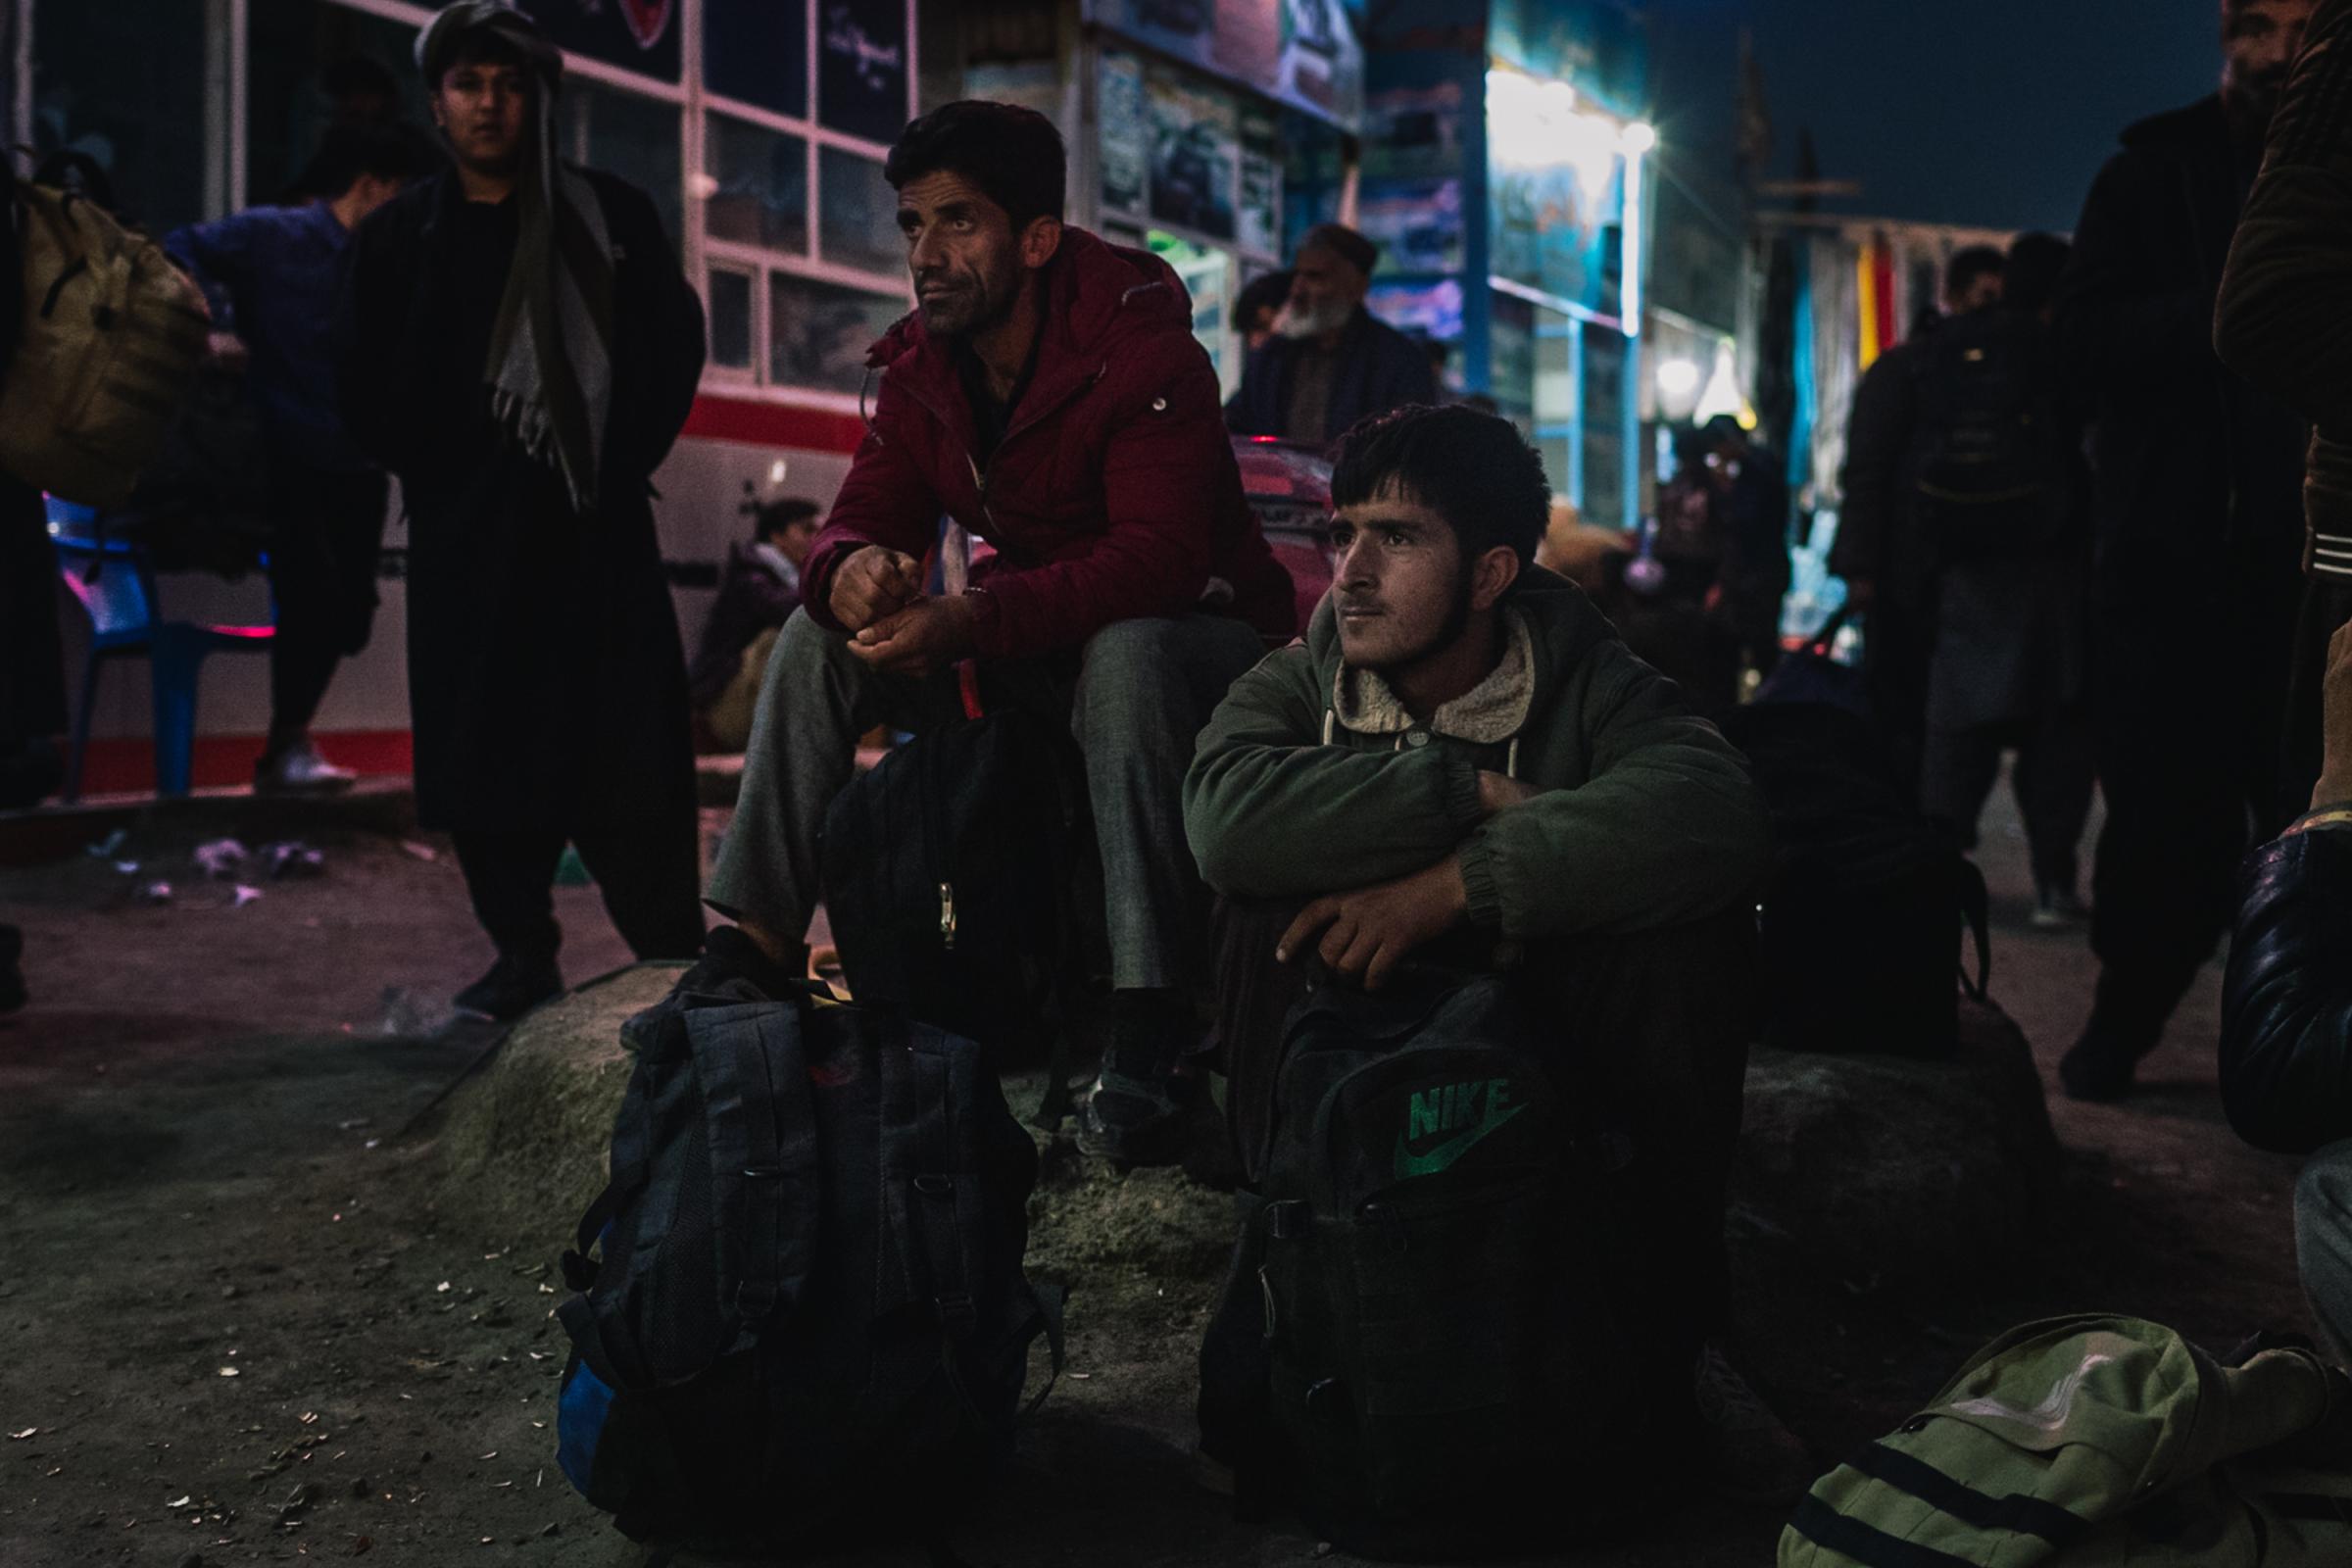 Afghan refugees at the bus terminal in Zarandj.